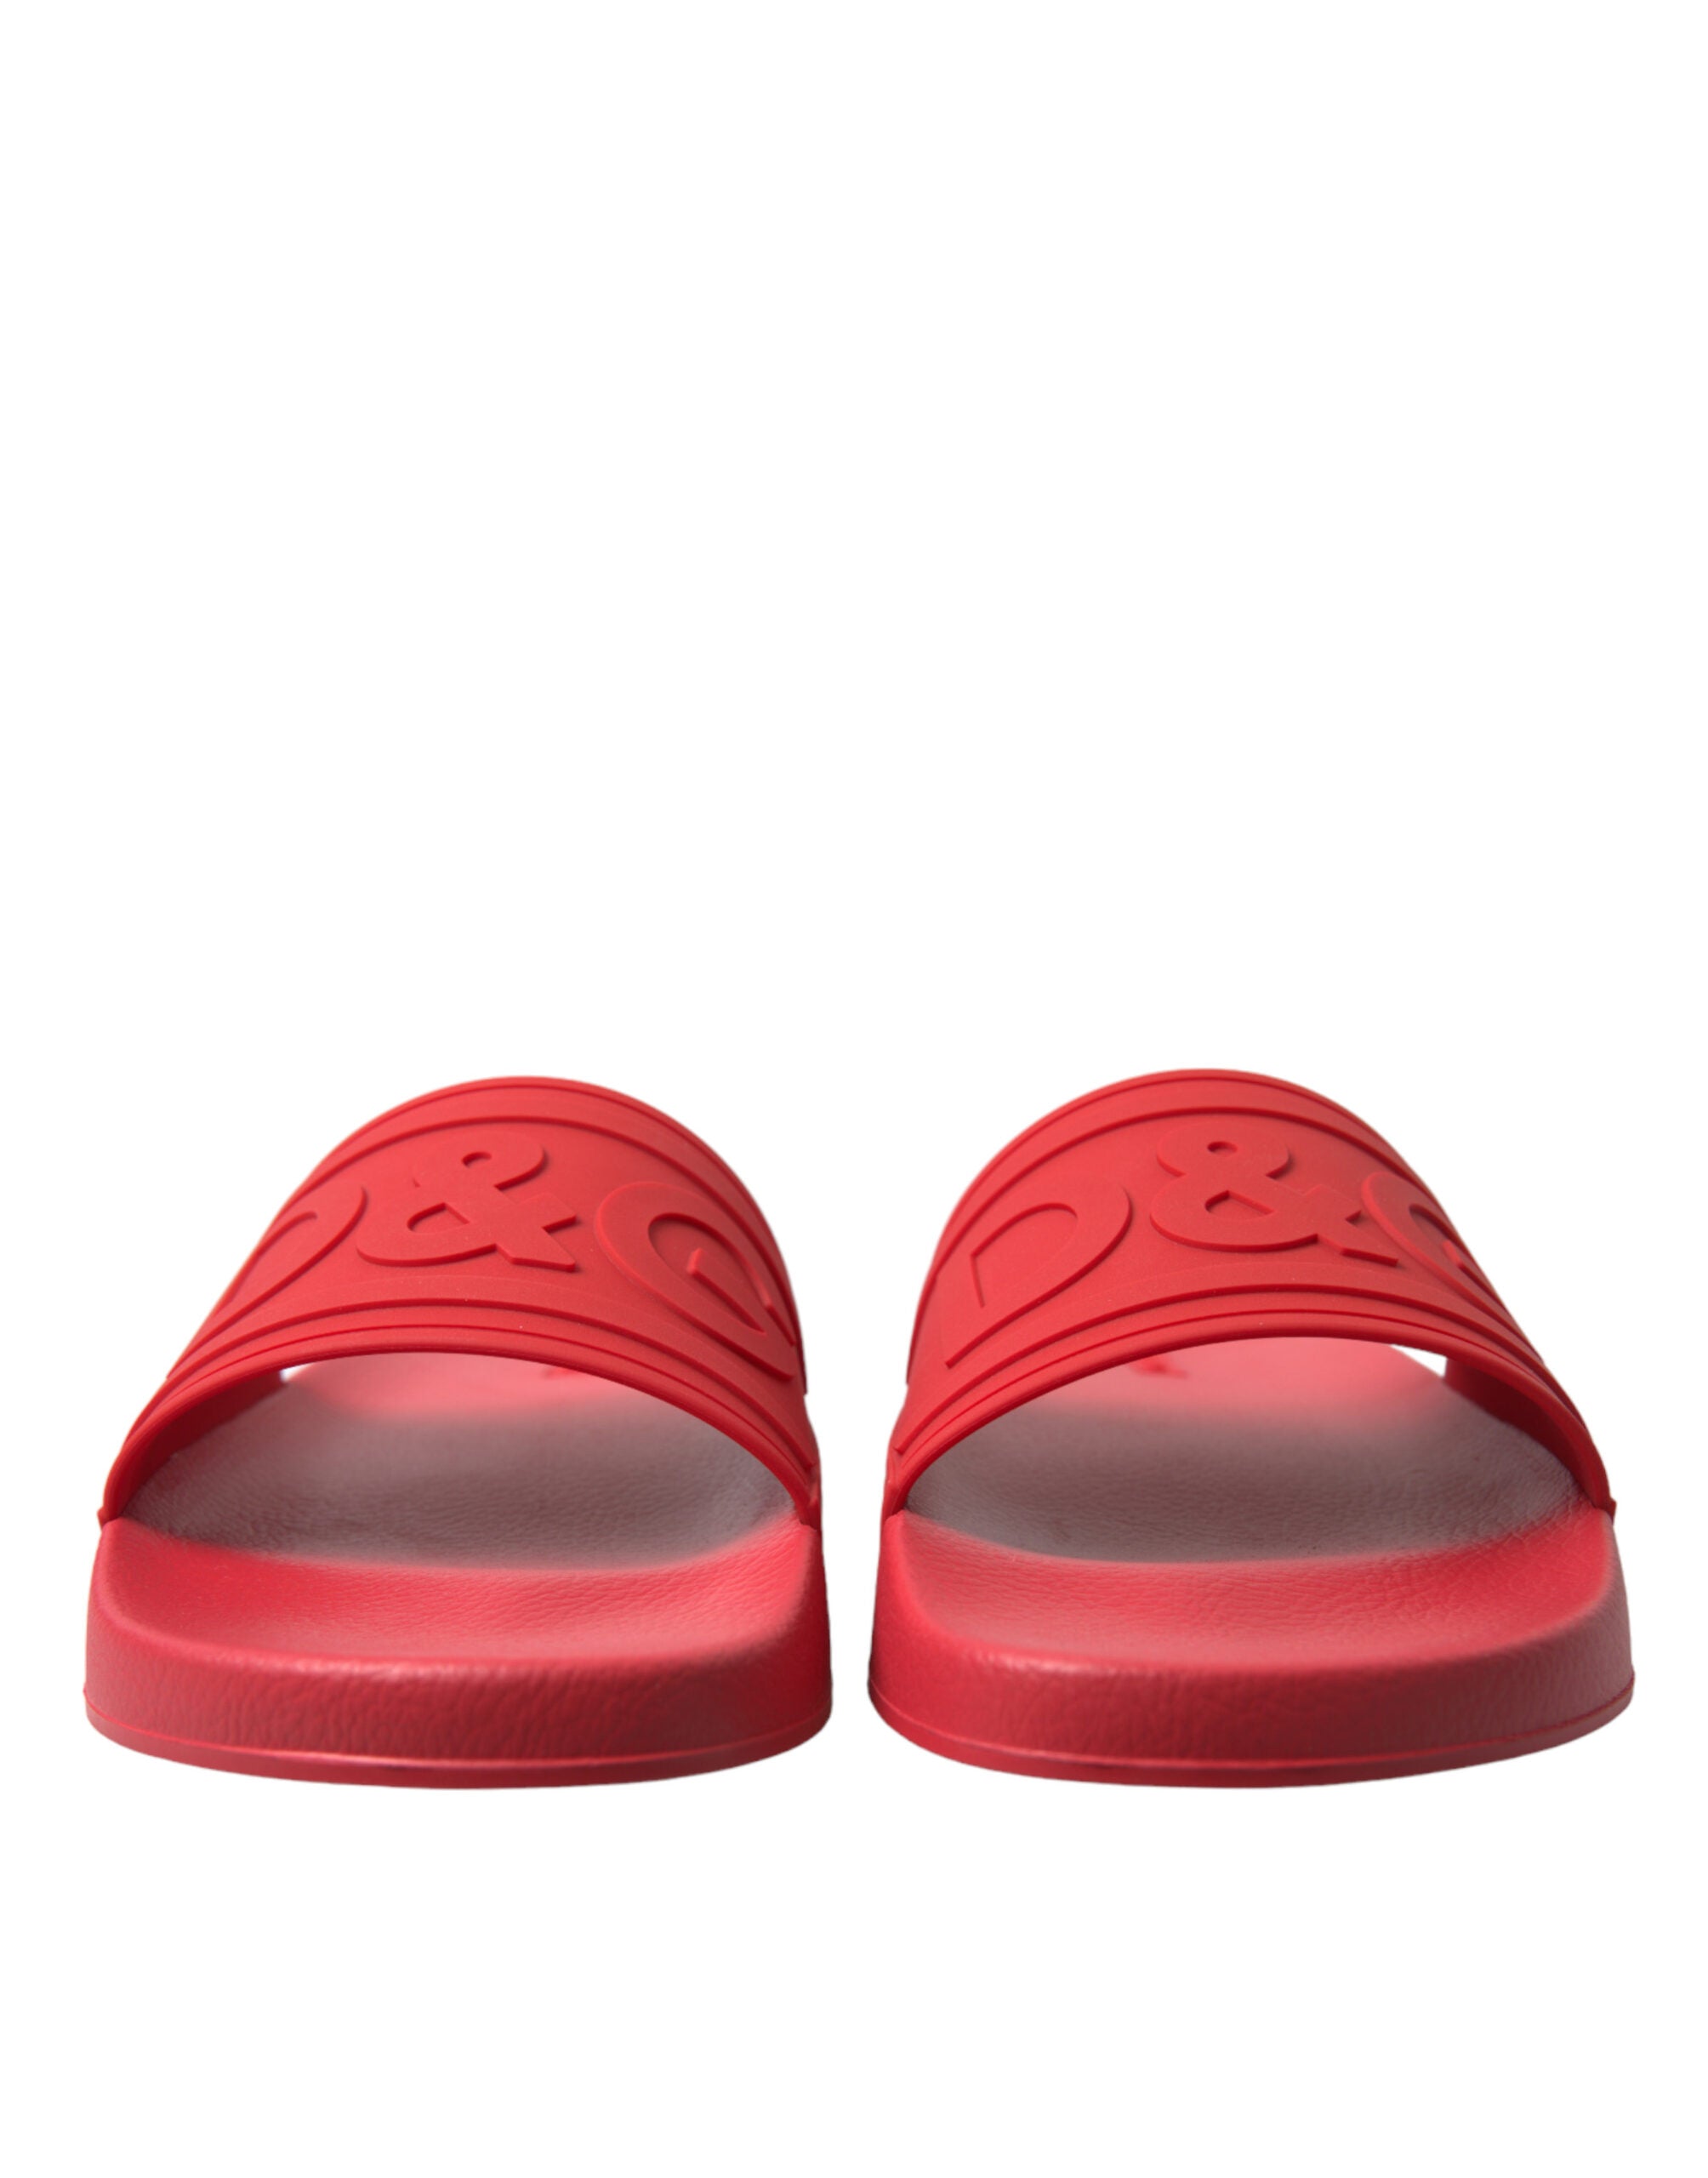 Dolce & Gabbana – Slide-Sandalen für Herren in strahlendem Rot